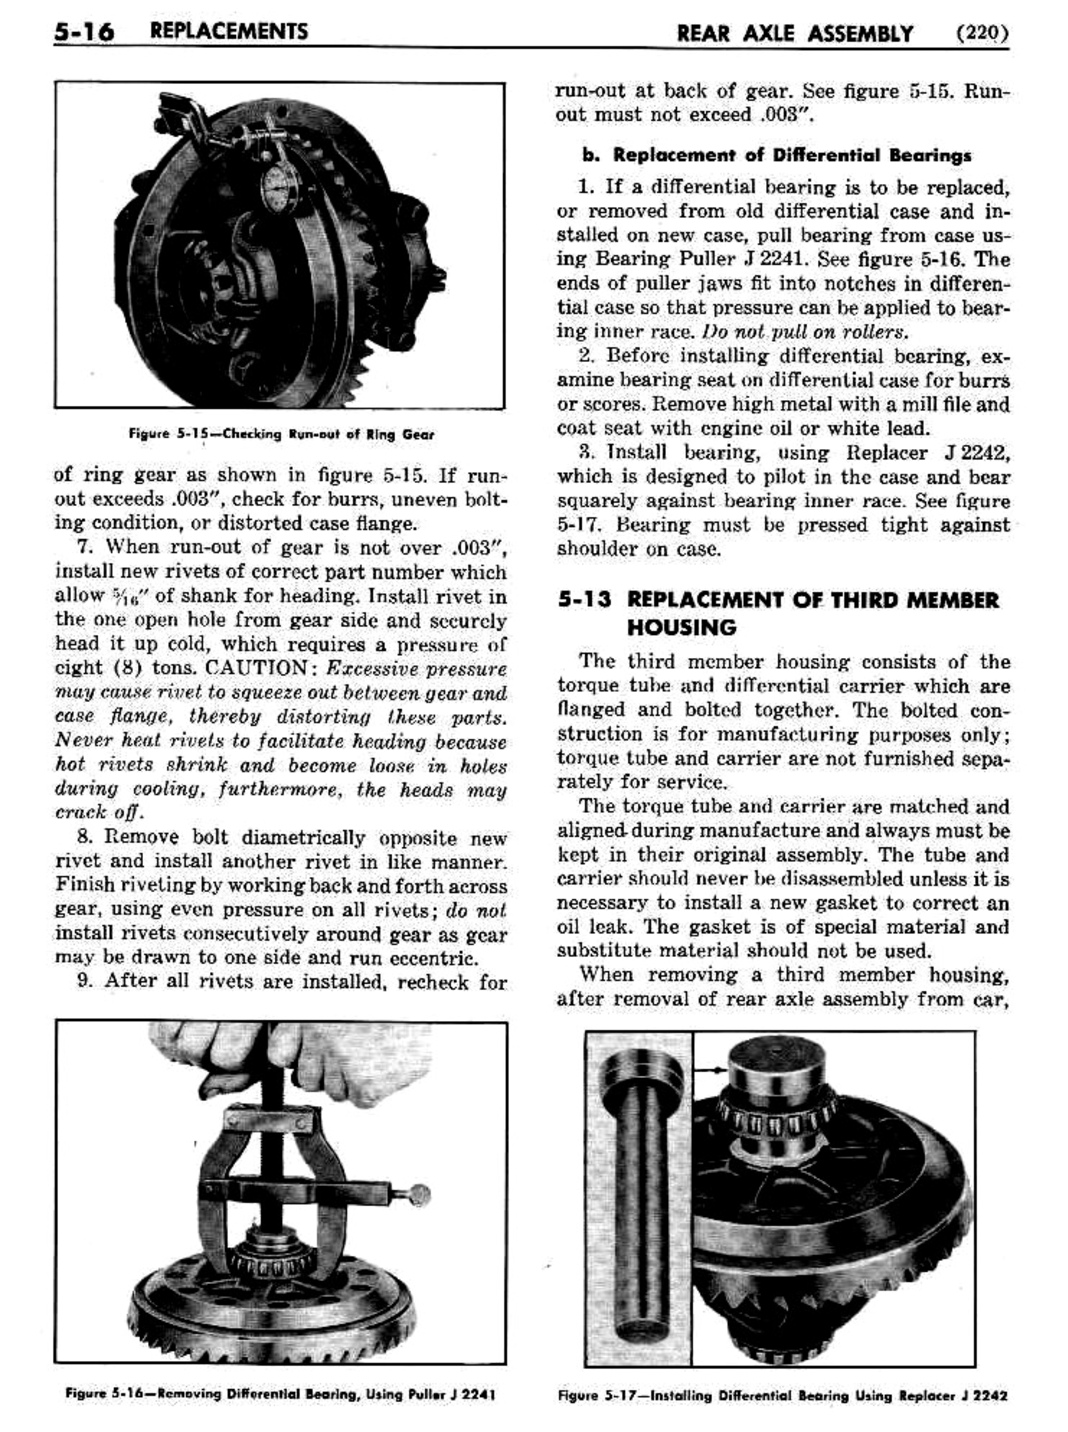 n_06 1951 Buick Shop Manual - Rear Axle-016-016.jpg